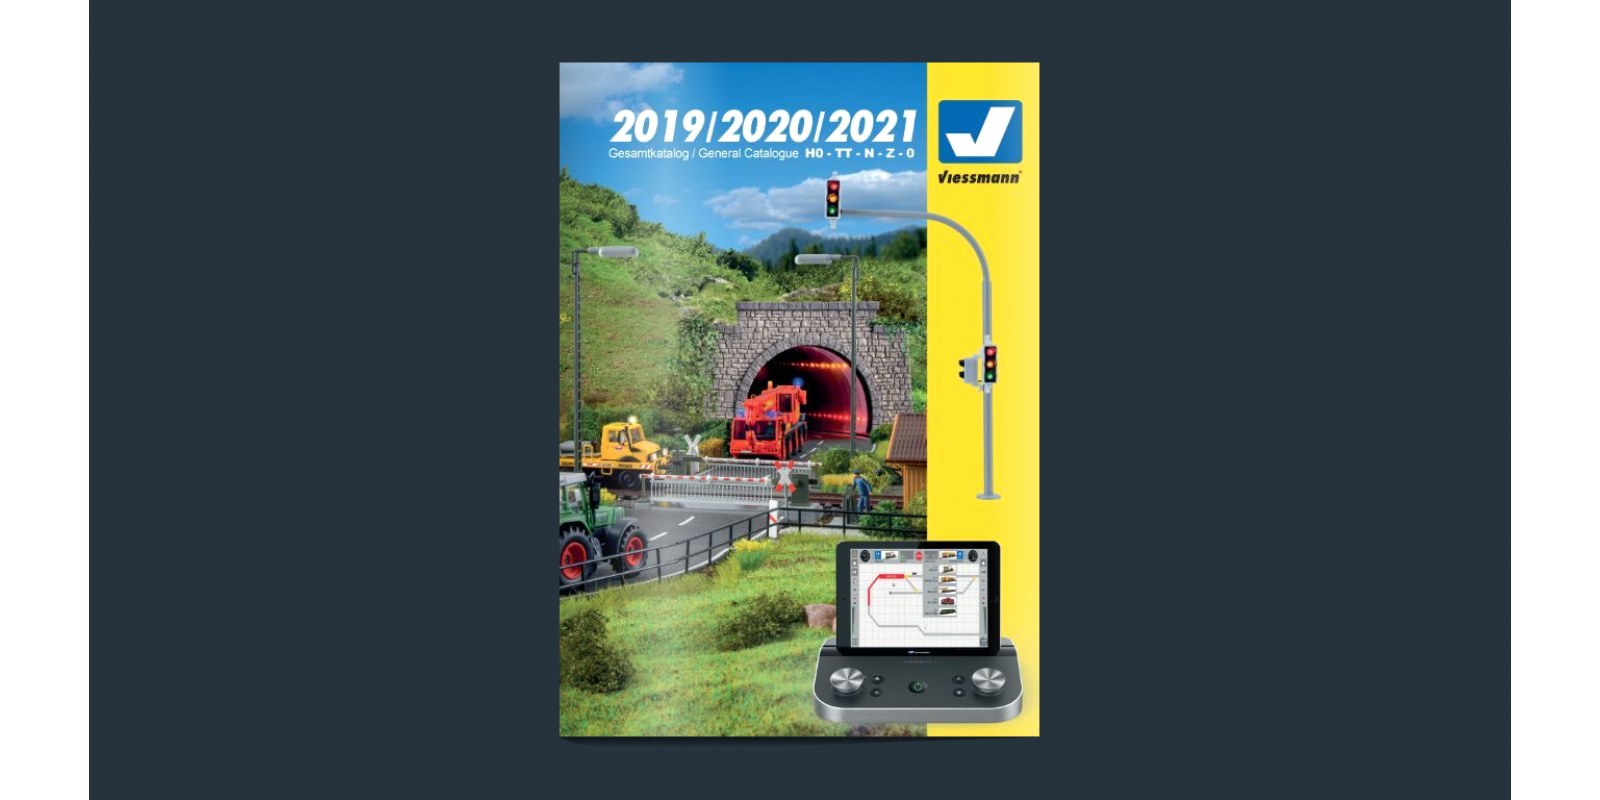 VI8999 Viessmann catalogue 2019/2020/2021 DE/EN